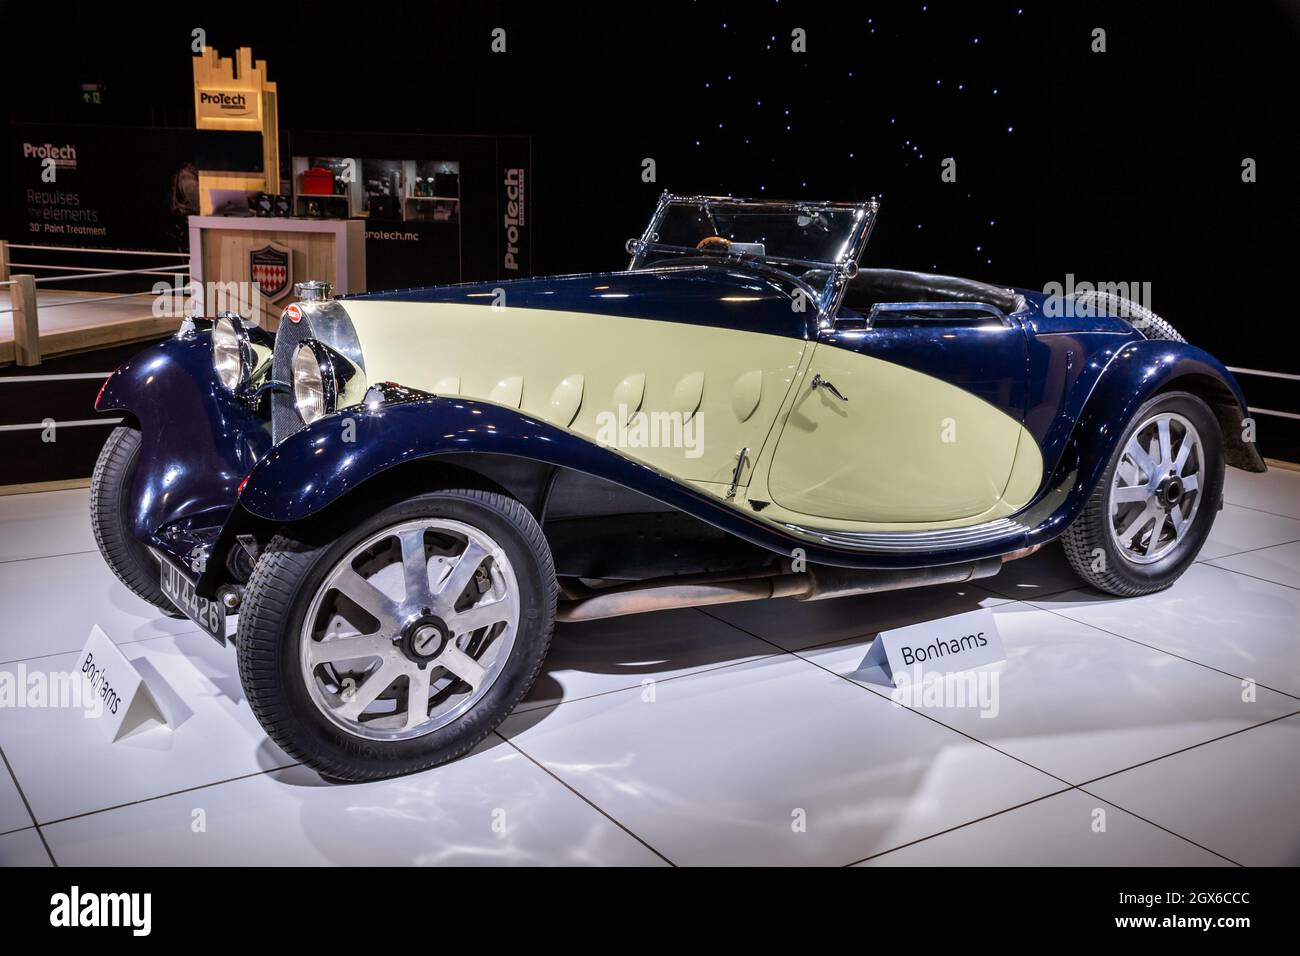 1932 Bugatti Type 55 Roadster classic car showcased at the Autosalon 2020 Motor Show. Brussels, Belgium - January 9, 2020. Stock Photo